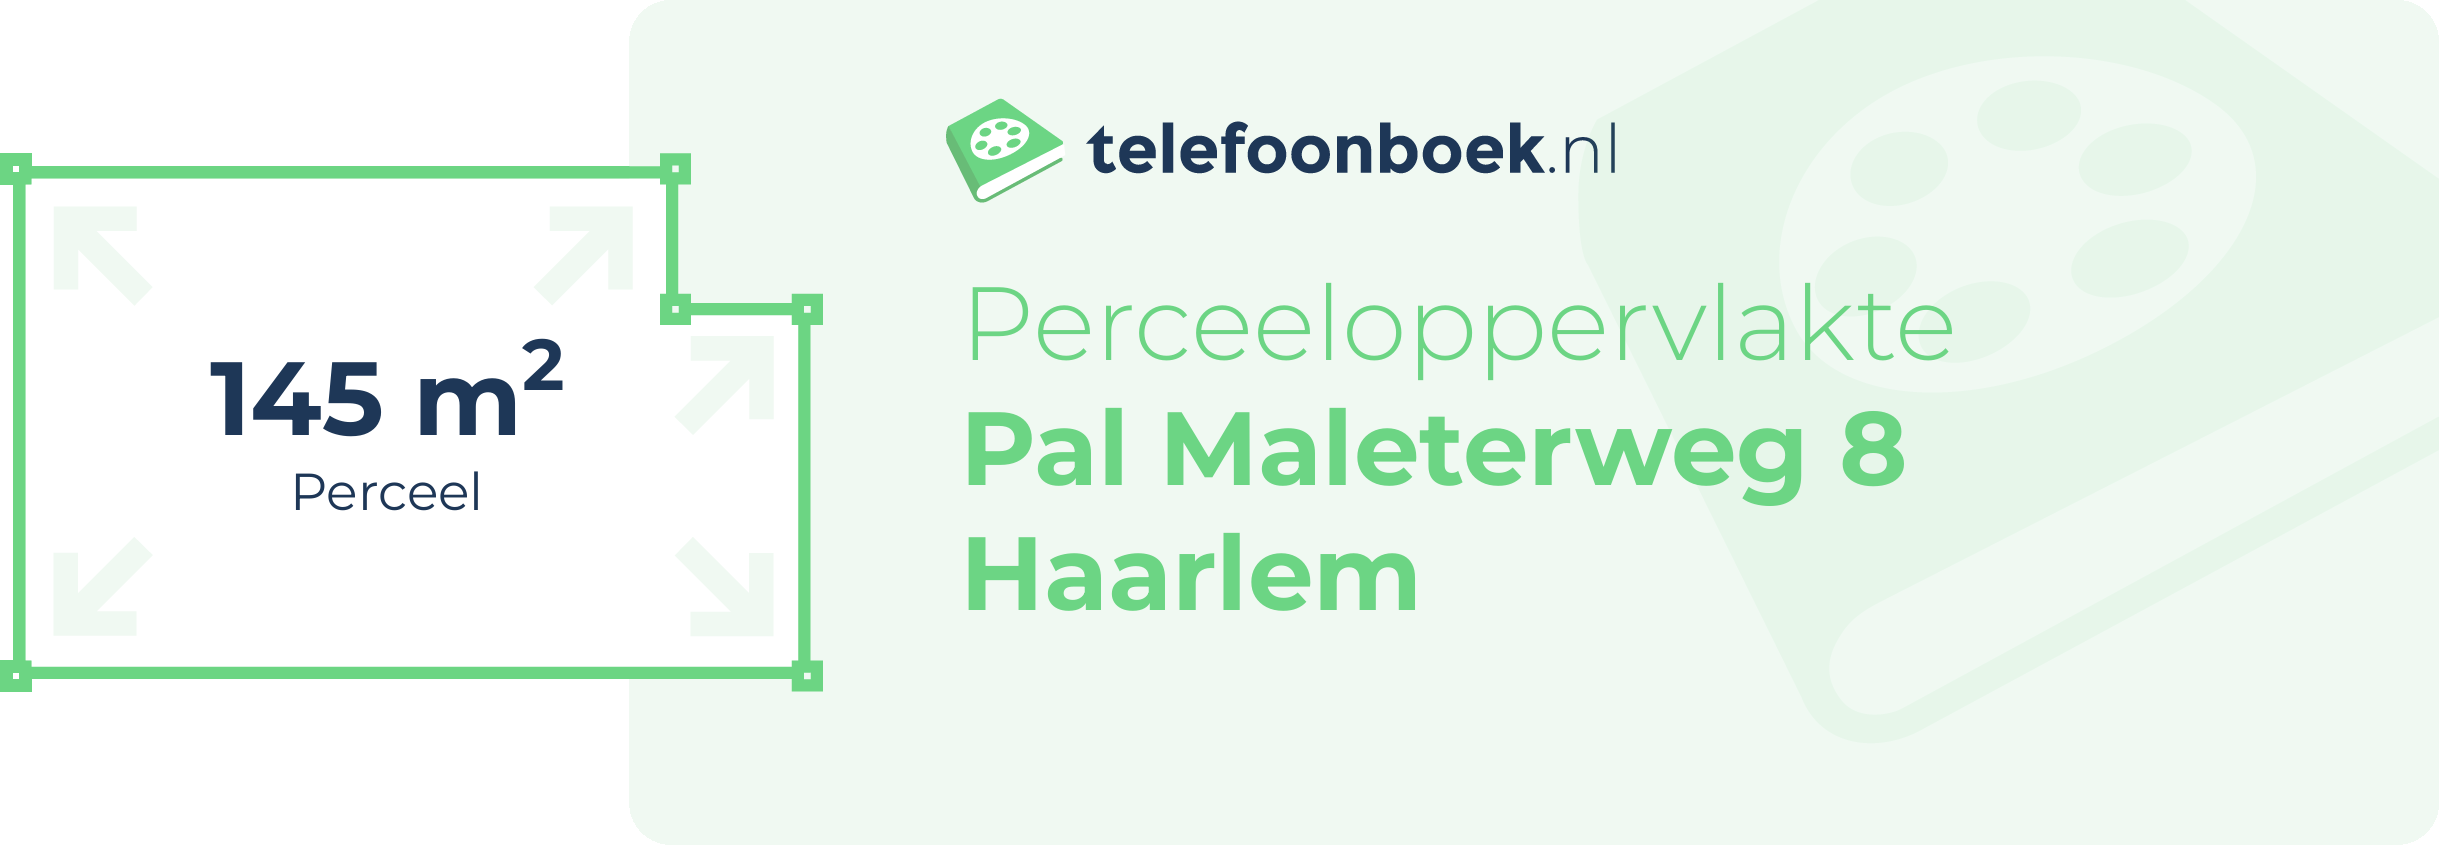 Perceeloppervlakte Pal Maleterweg 8 Haarlem